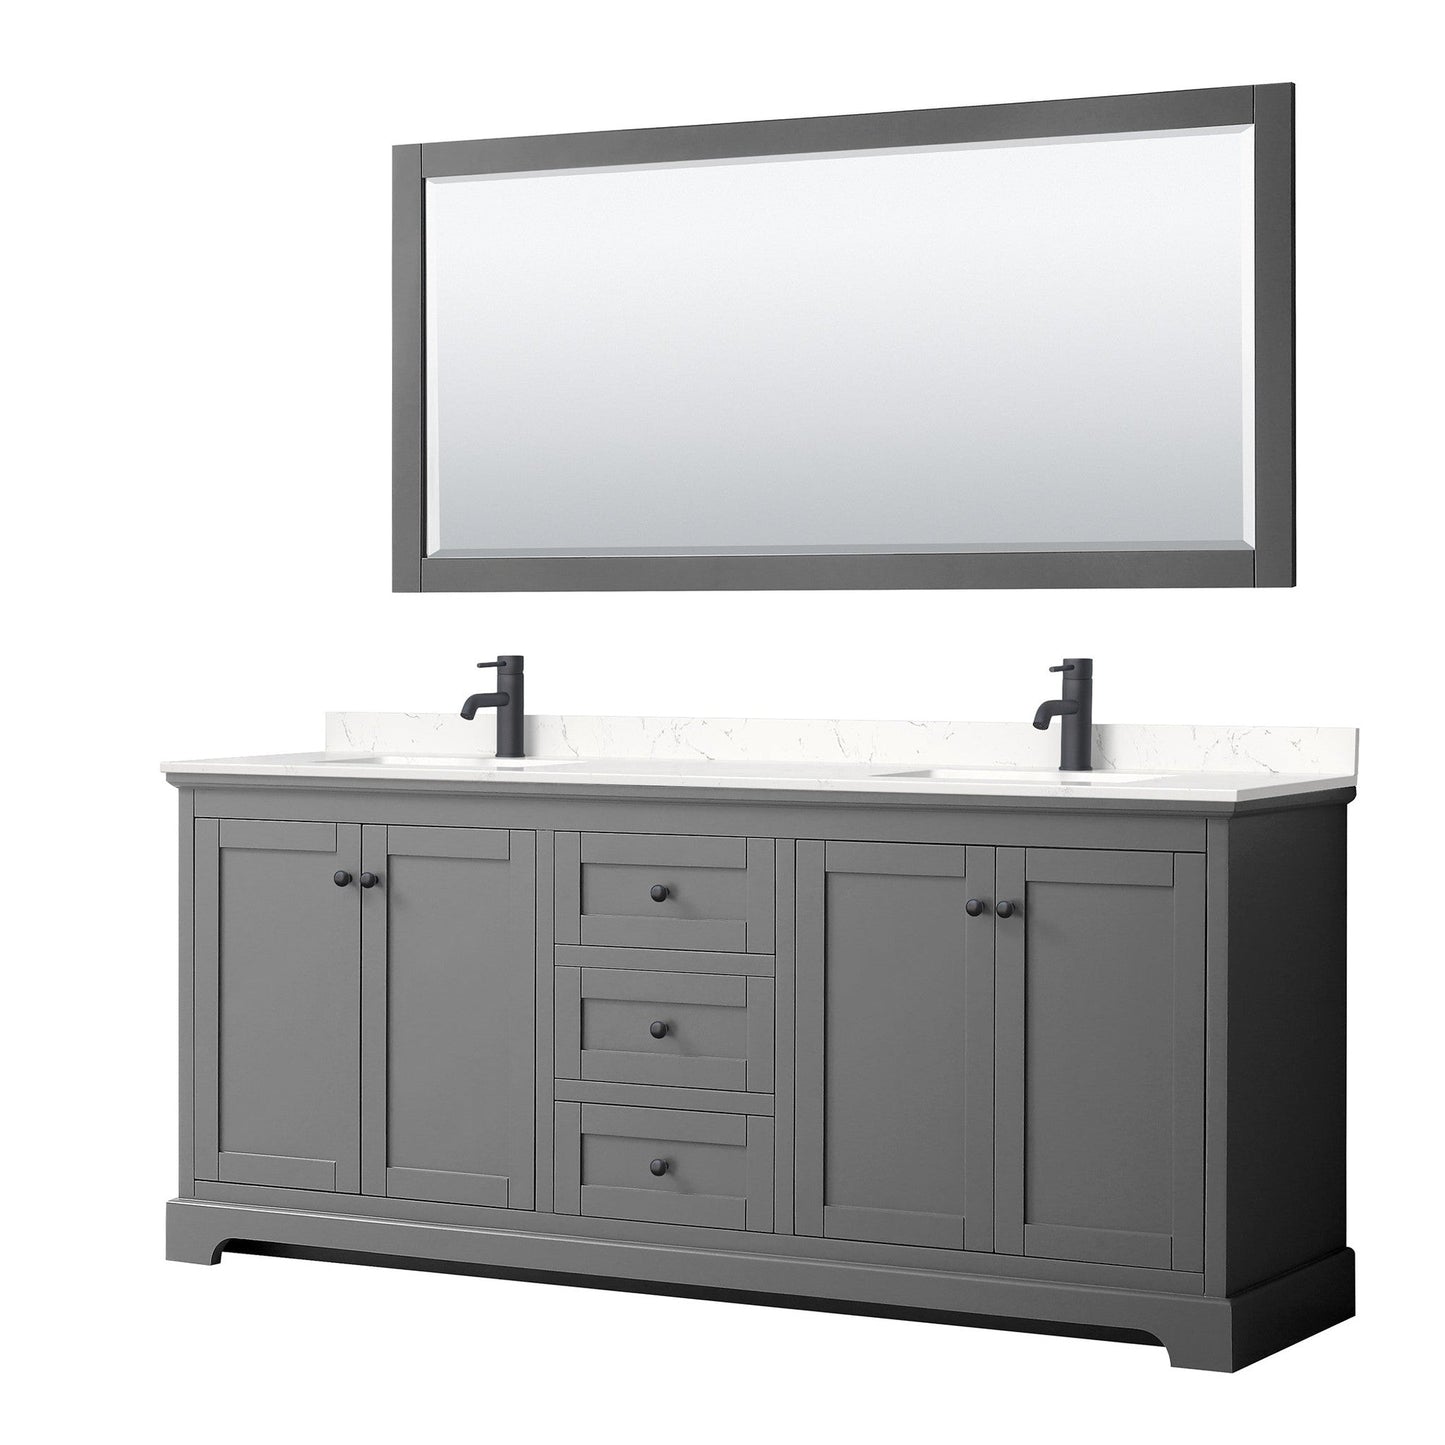 Avery 80" Double Bathroom Vanity in Dark Gray, Carrara Cultured Marble Countertop, Undermount Square Sinks, Matte Black Trim, 70" Mirror